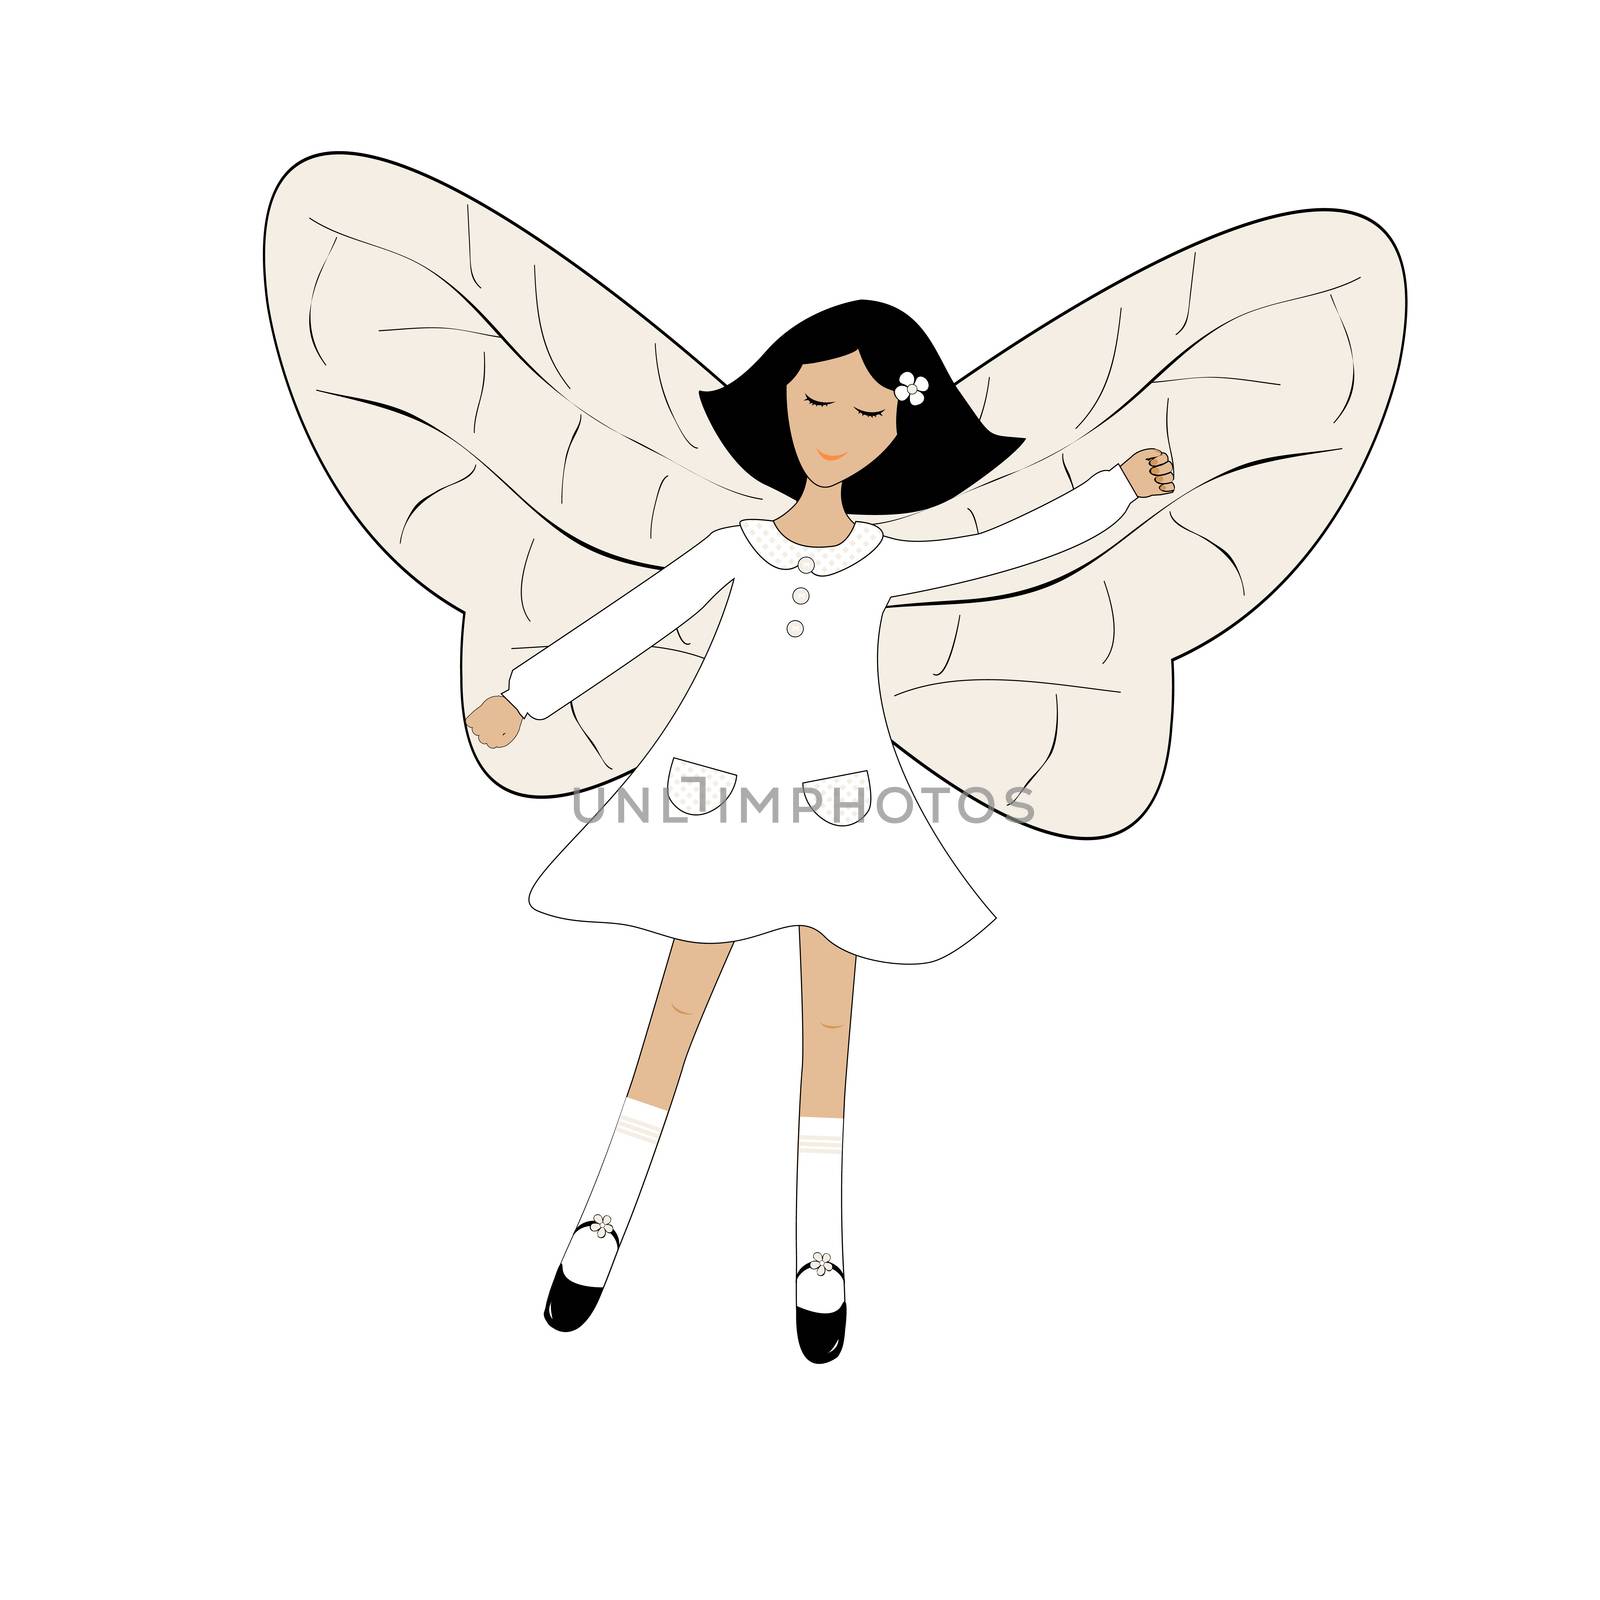 Cute cartoon girl with butterfly wings